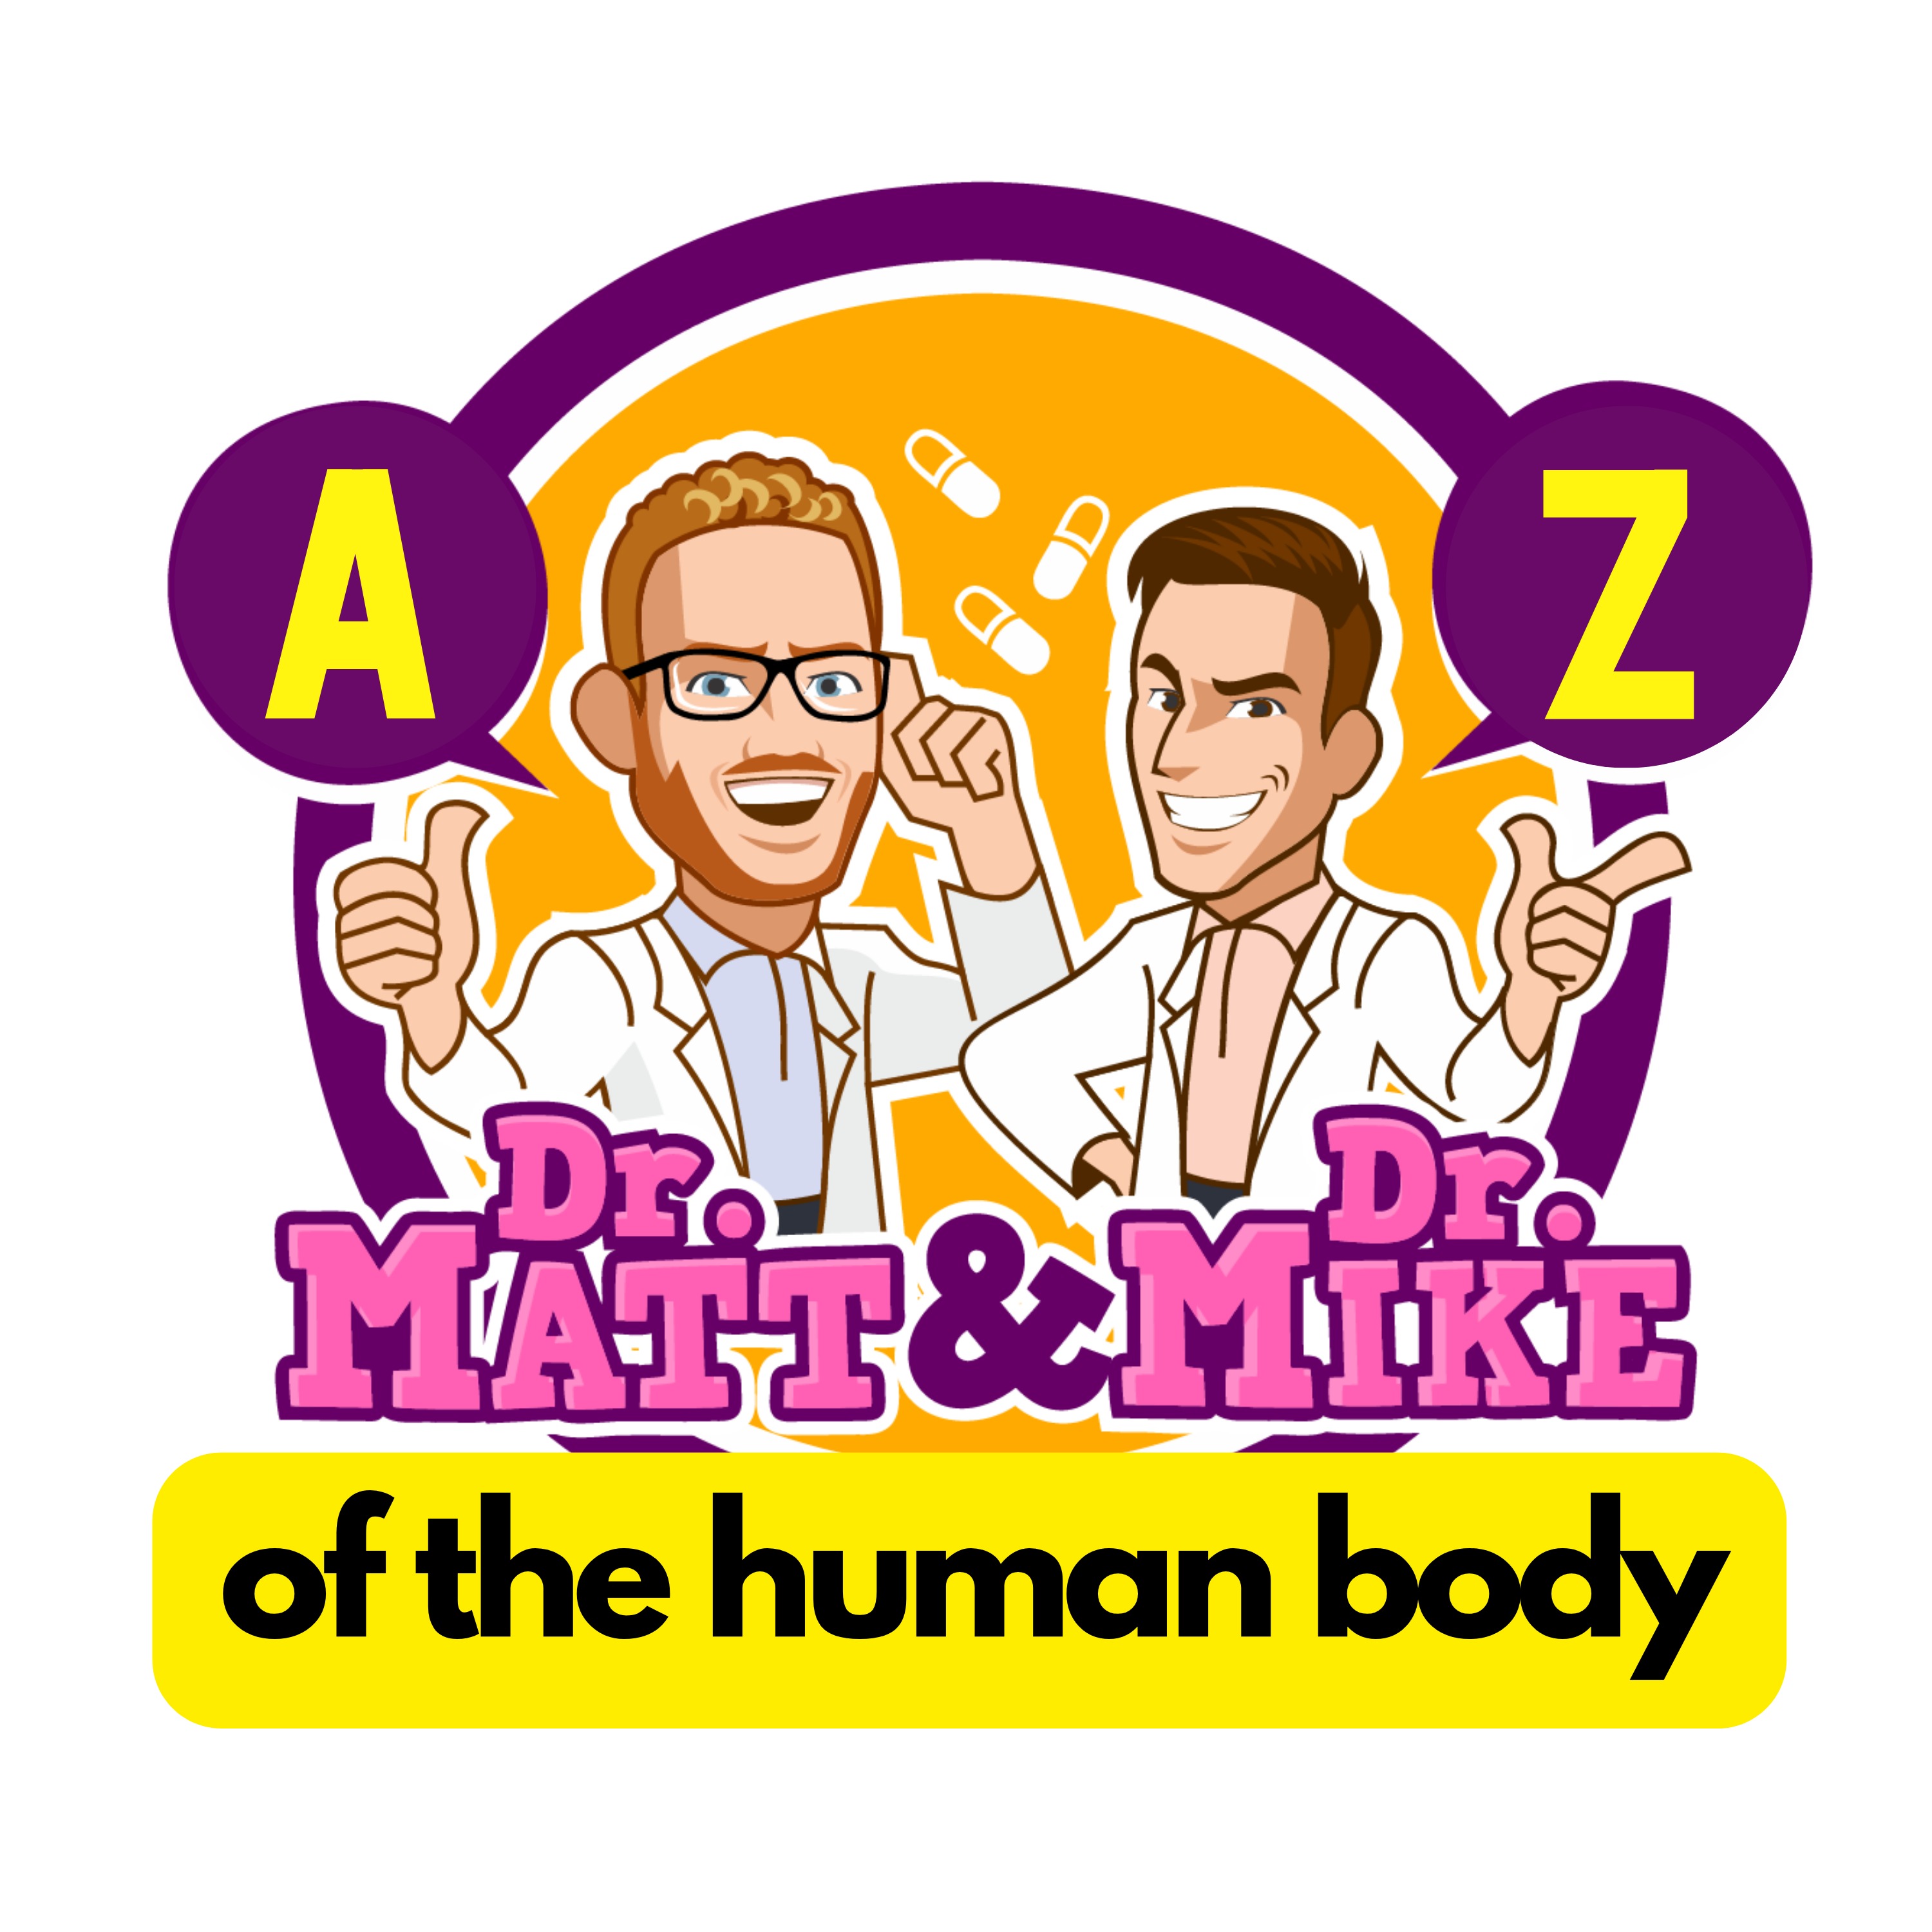 Aldolase | A-Z of the Human Body